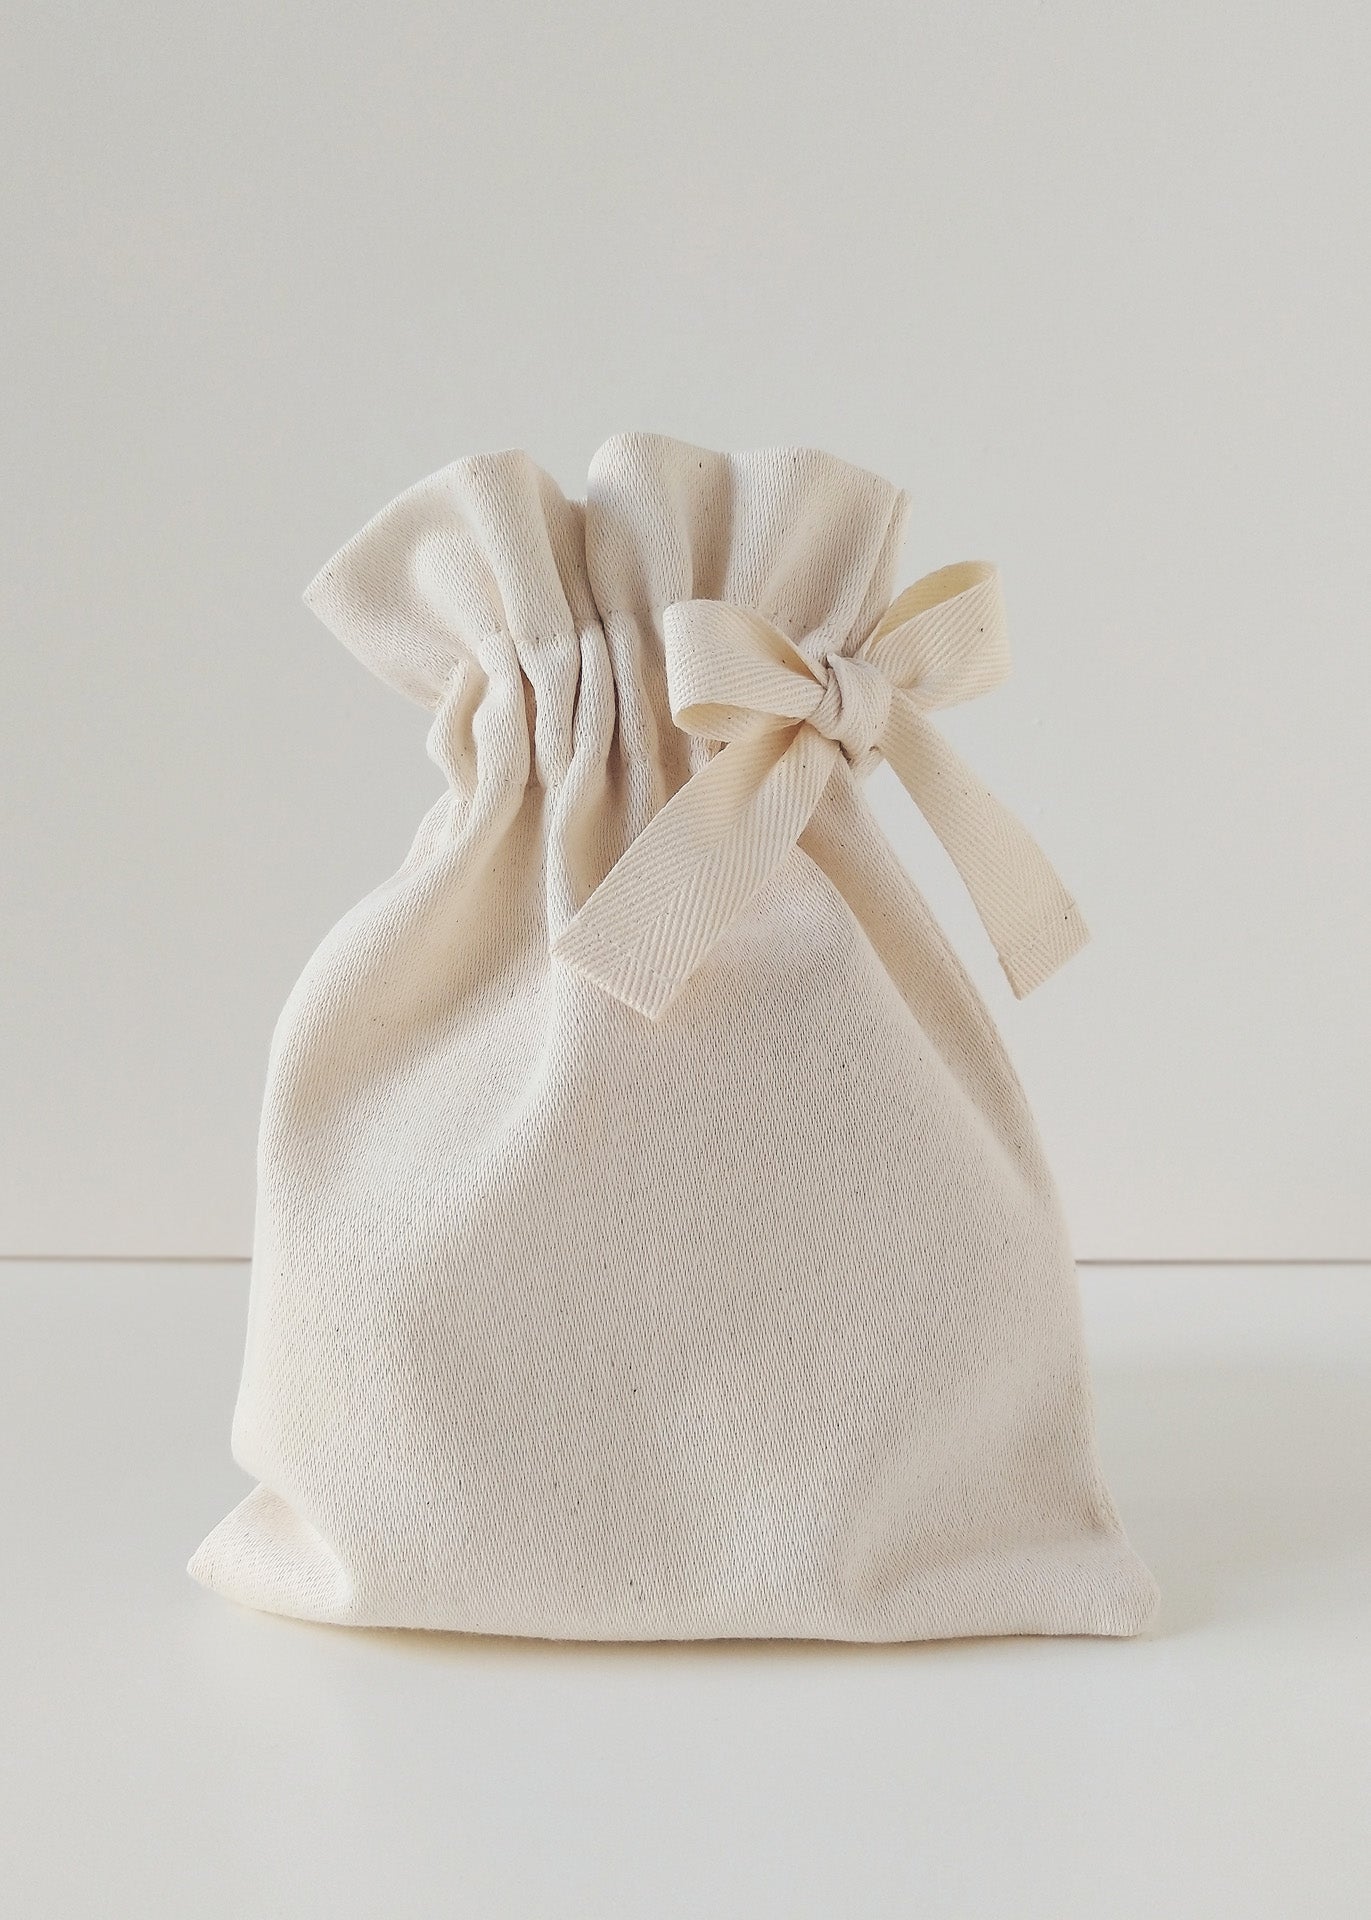 Home spa Gift Set - Brown - 100% Cotton (organic) / 100 % Baumwolle (Bio)